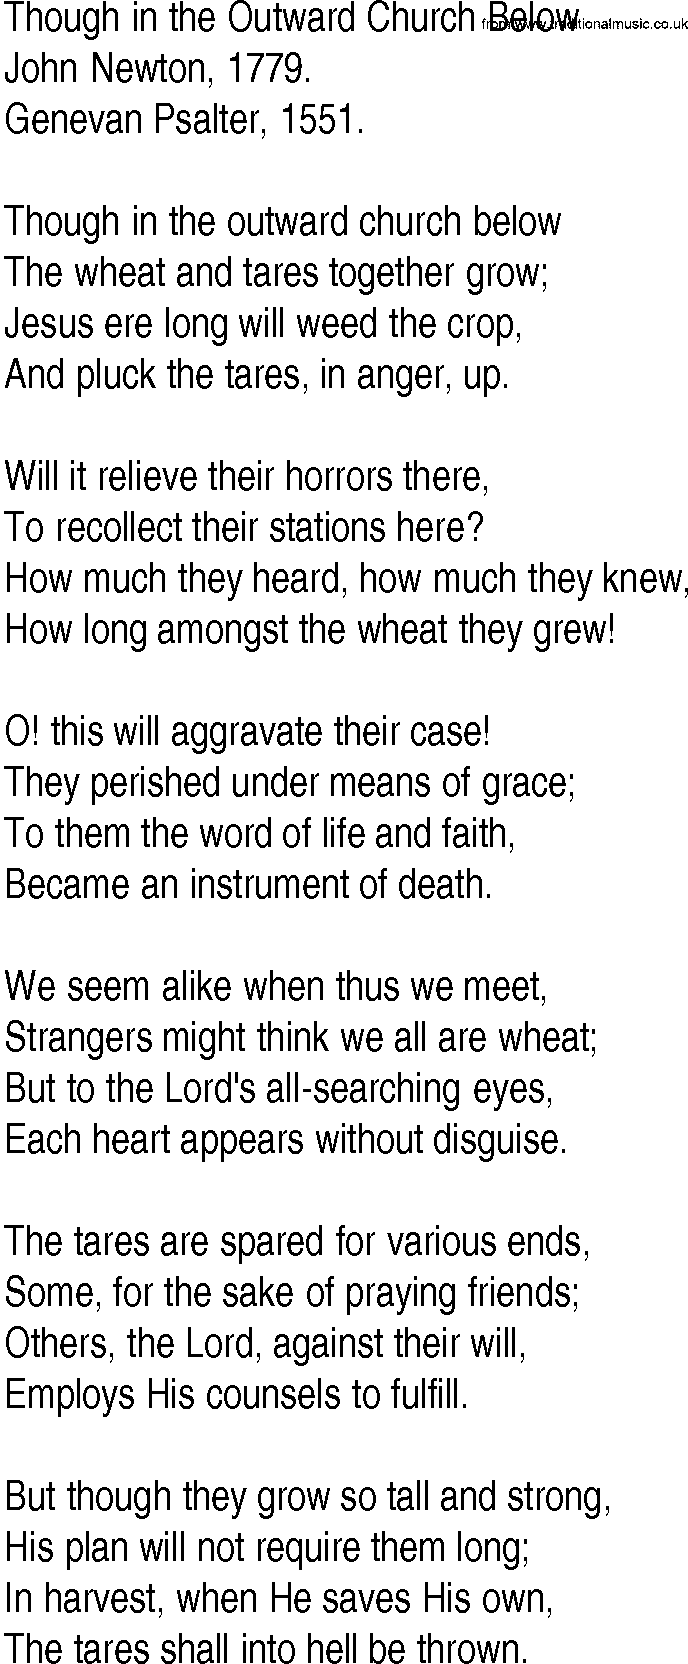 Hymn and Gospel Song: Though in the Outward Church Below by John Newton lyrics